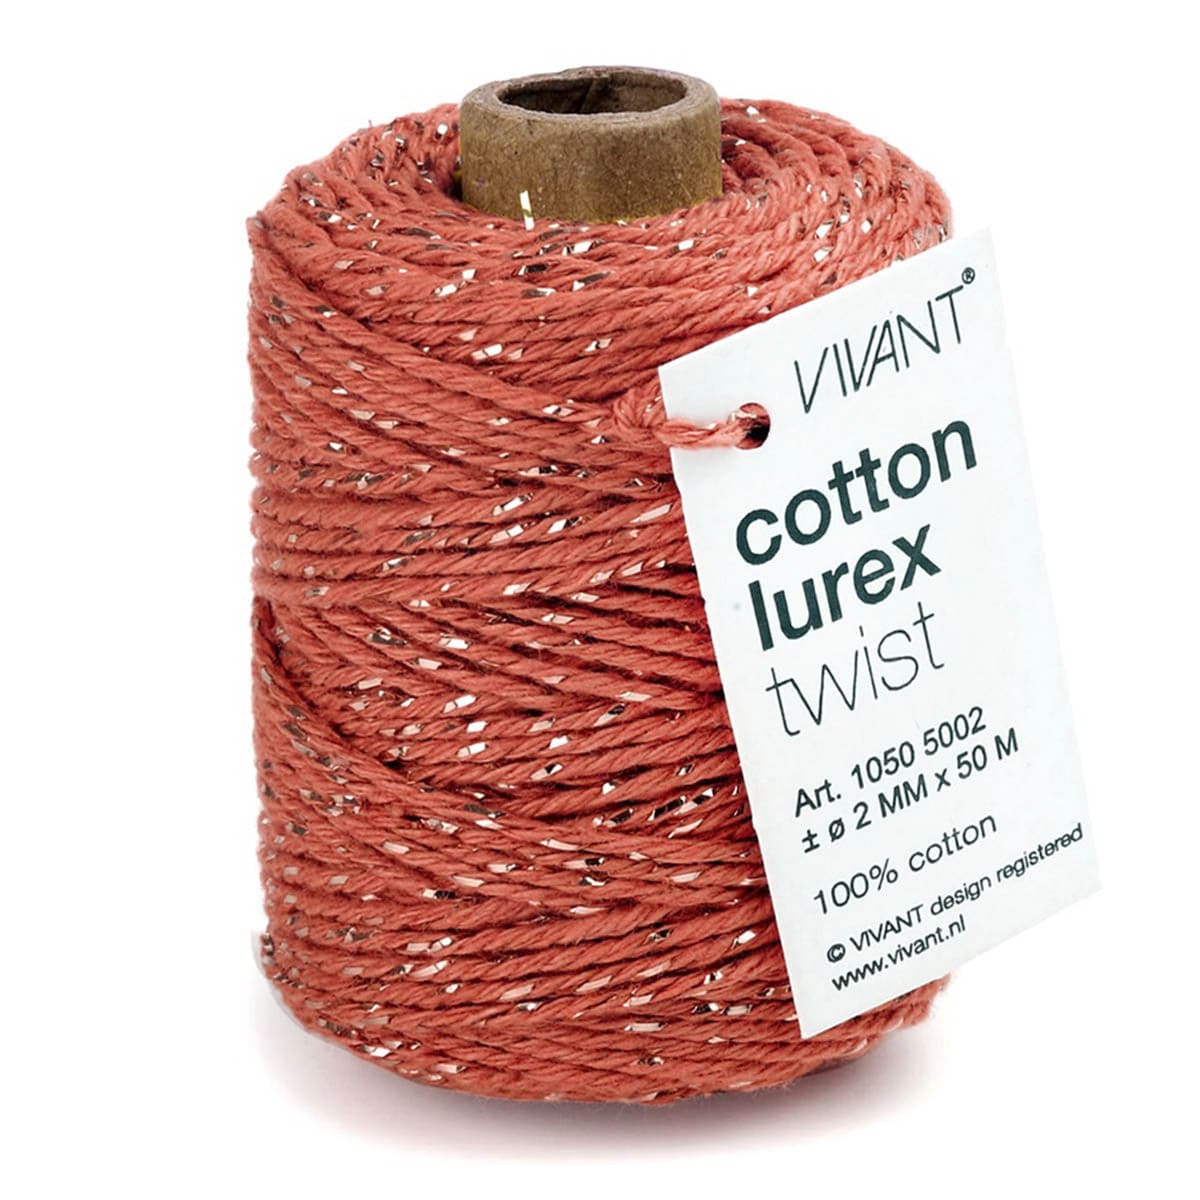 Vivant - Lurex Rust Cotton Cord - 54 yards